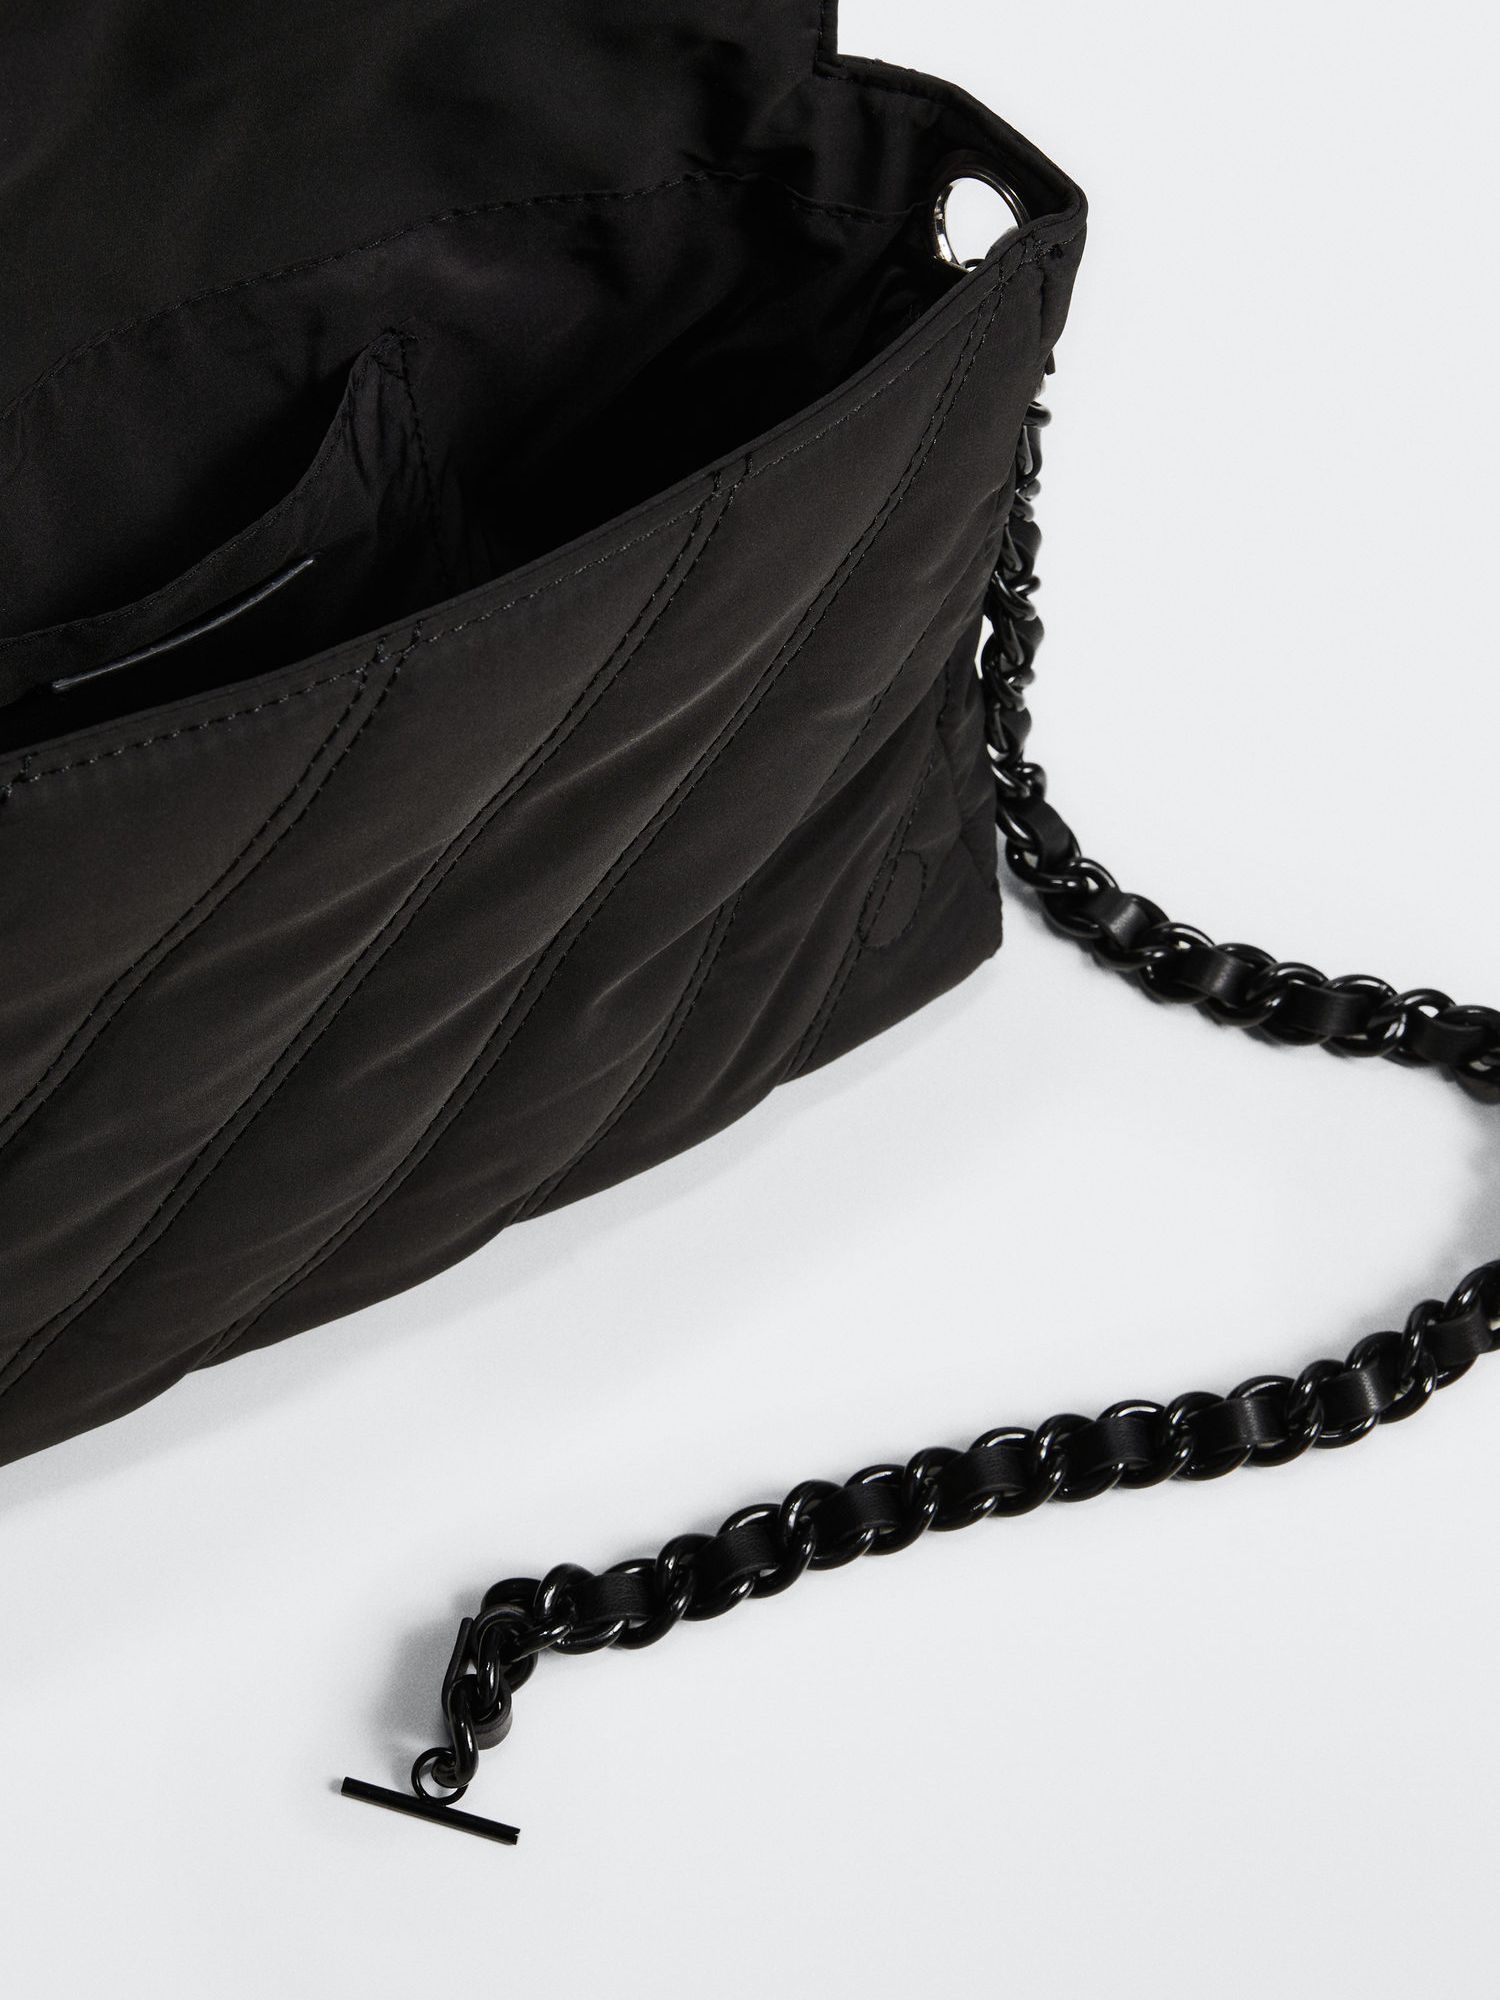 Mango Rodas Quilted Cross Body Bag, Black at John Lewis & Partners